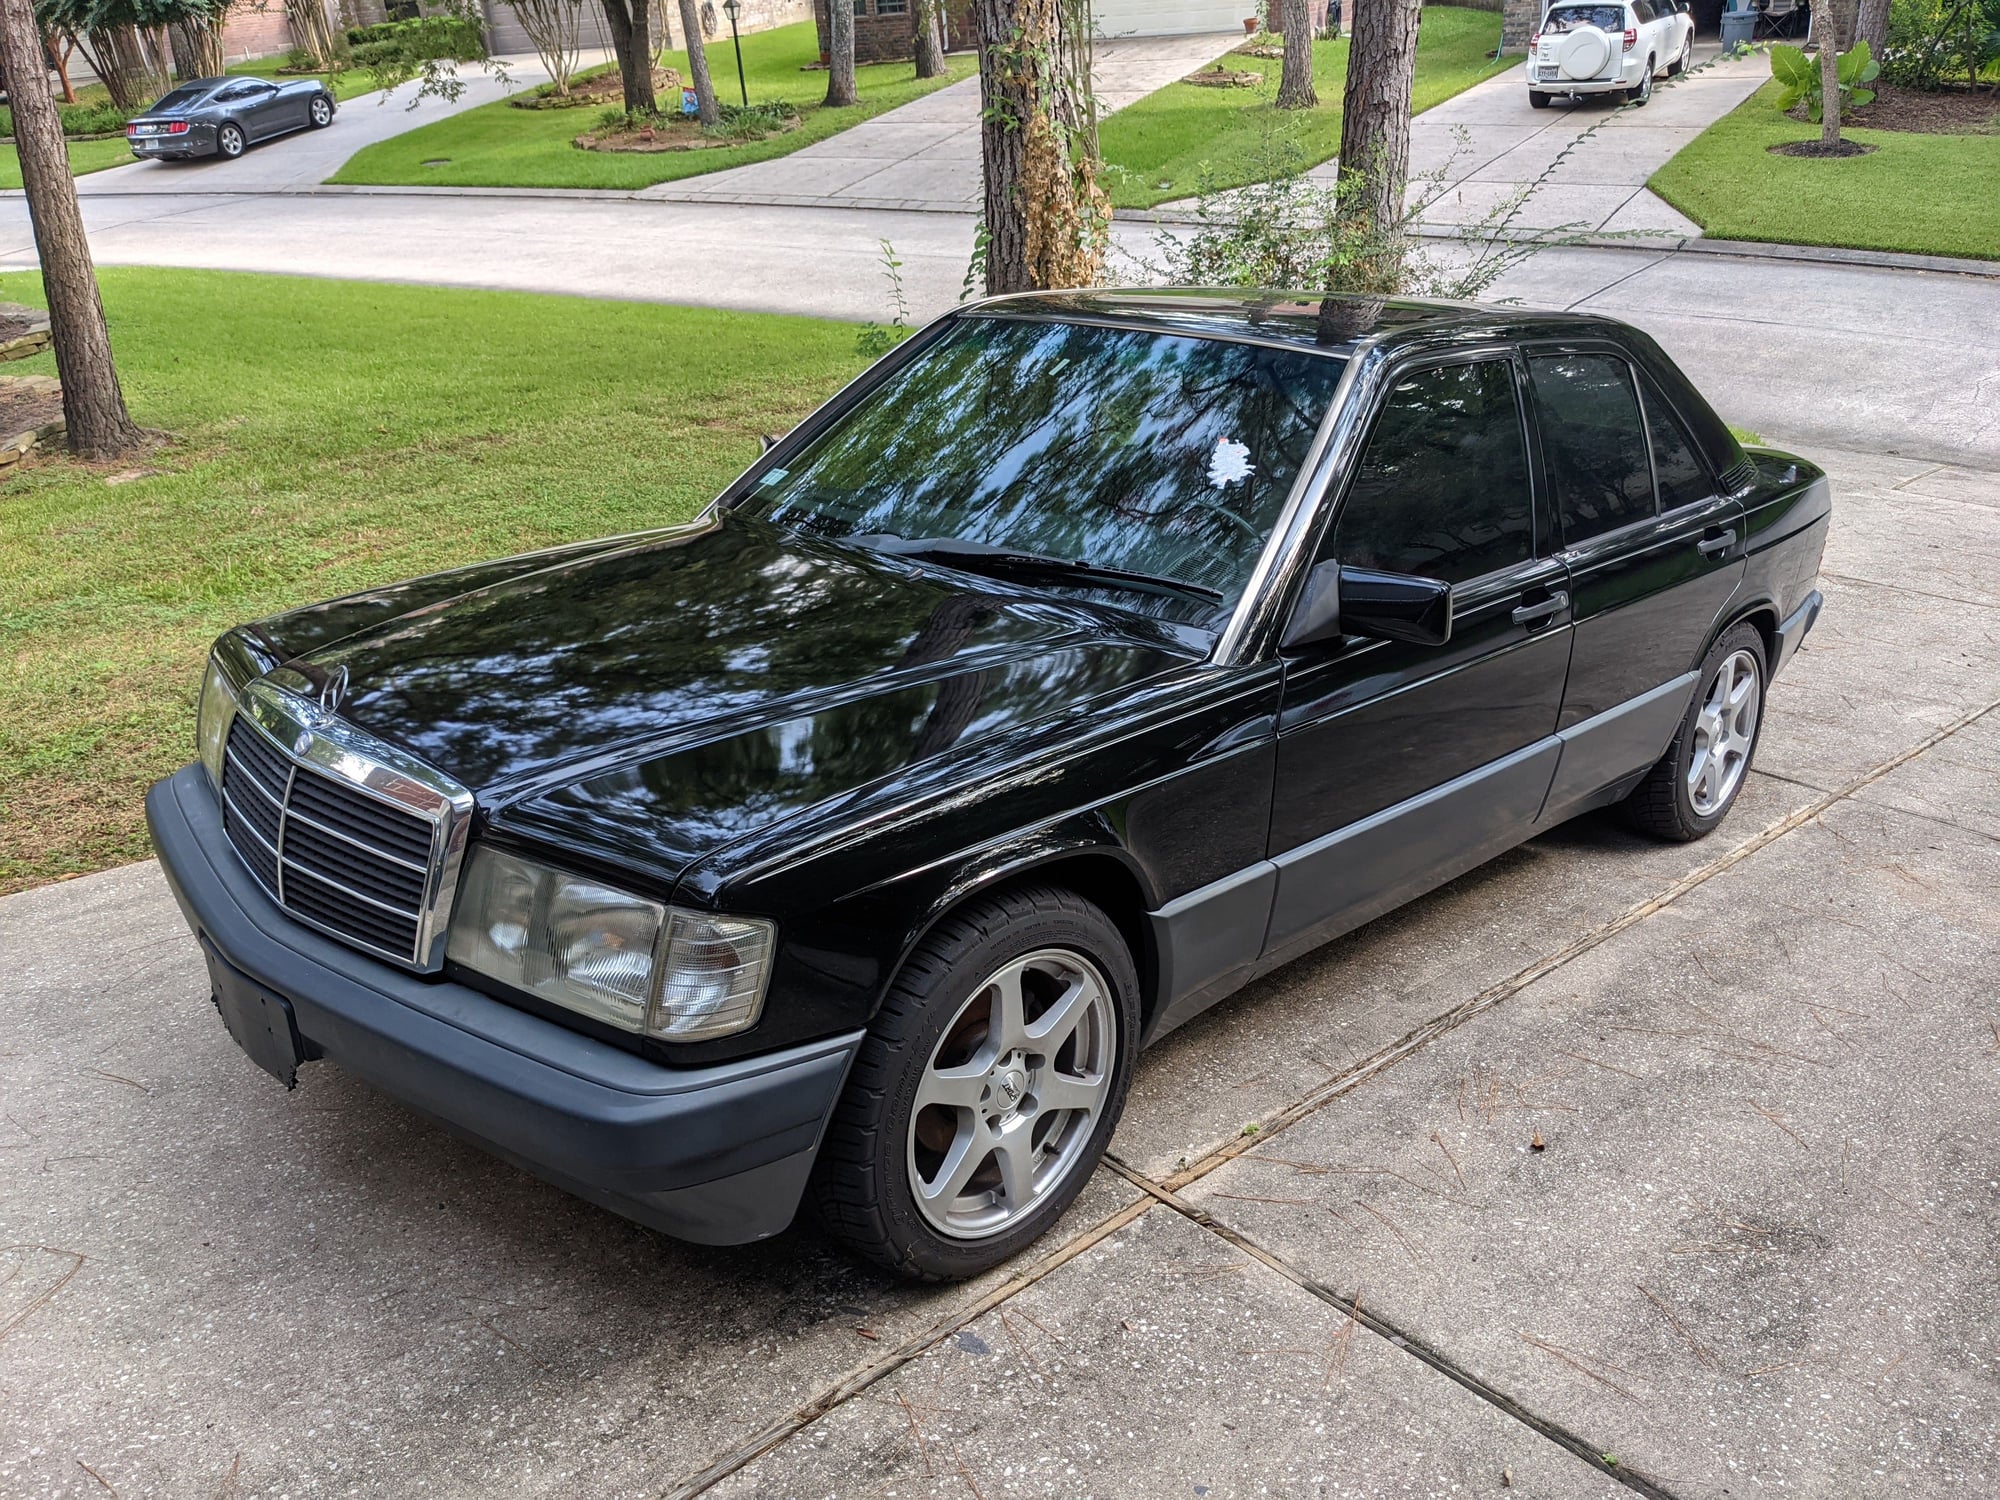 1993 Mercedes-Benz 190E - 1993 Mercedes 190E Sportline #487/700, Not Running - Used - VIN WDBDA29D6PG067900 - 158,000 Miles - 6 cyl - 2WD - Manual - Sedan - Black - The Woodlands, TX 77381, United States